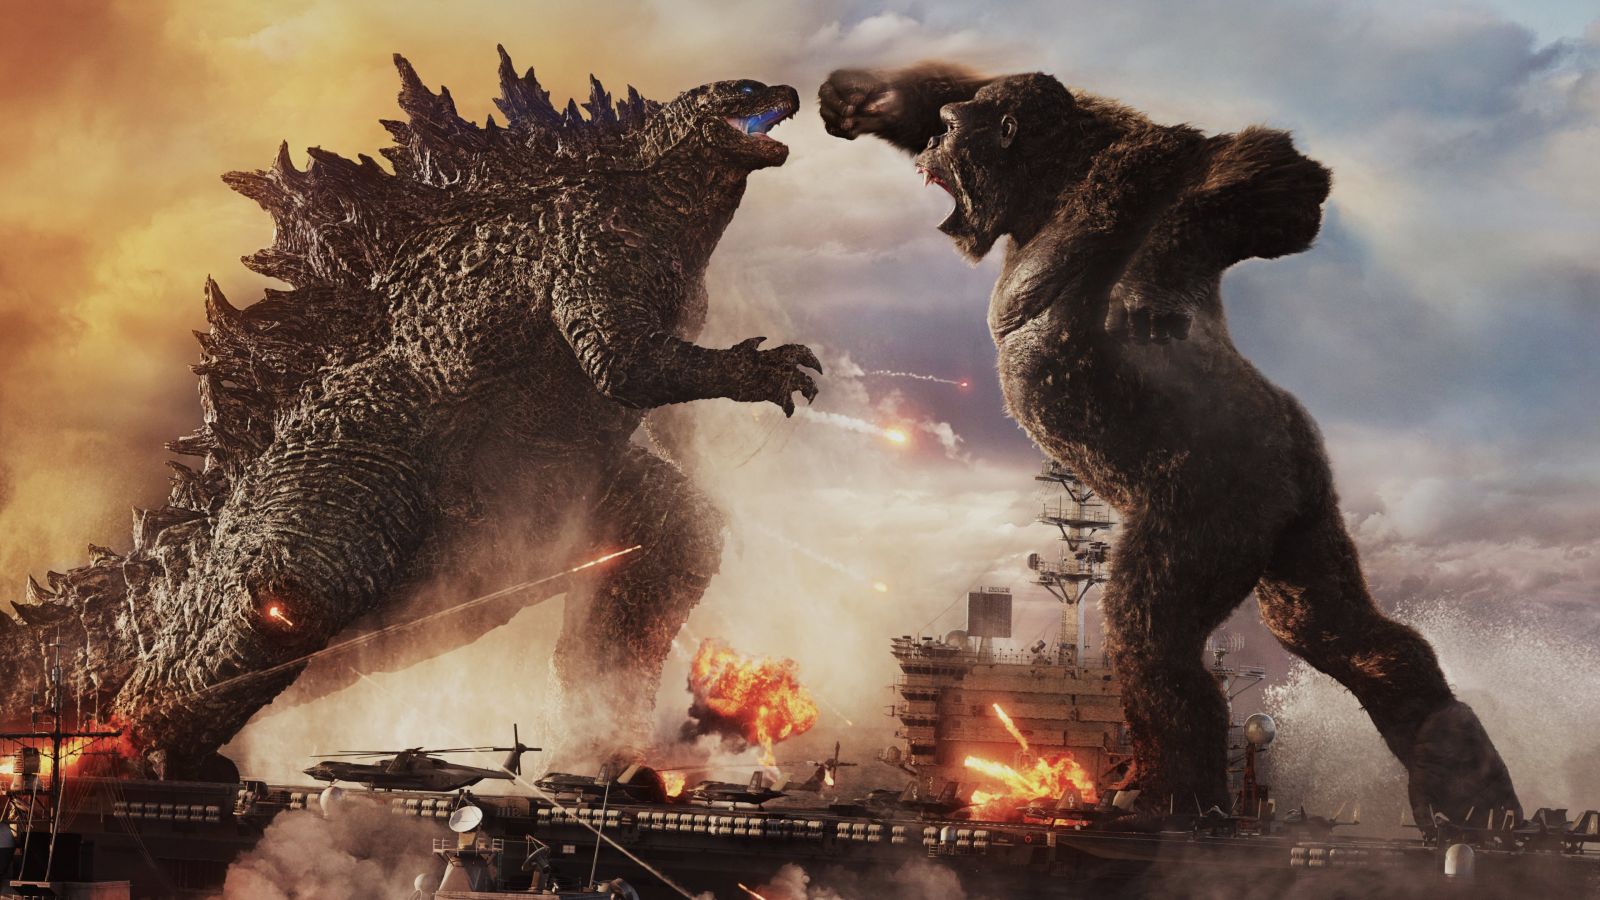 Godzilla vs Kong (2021) Full Movie HD 720P Watch Online Full Free